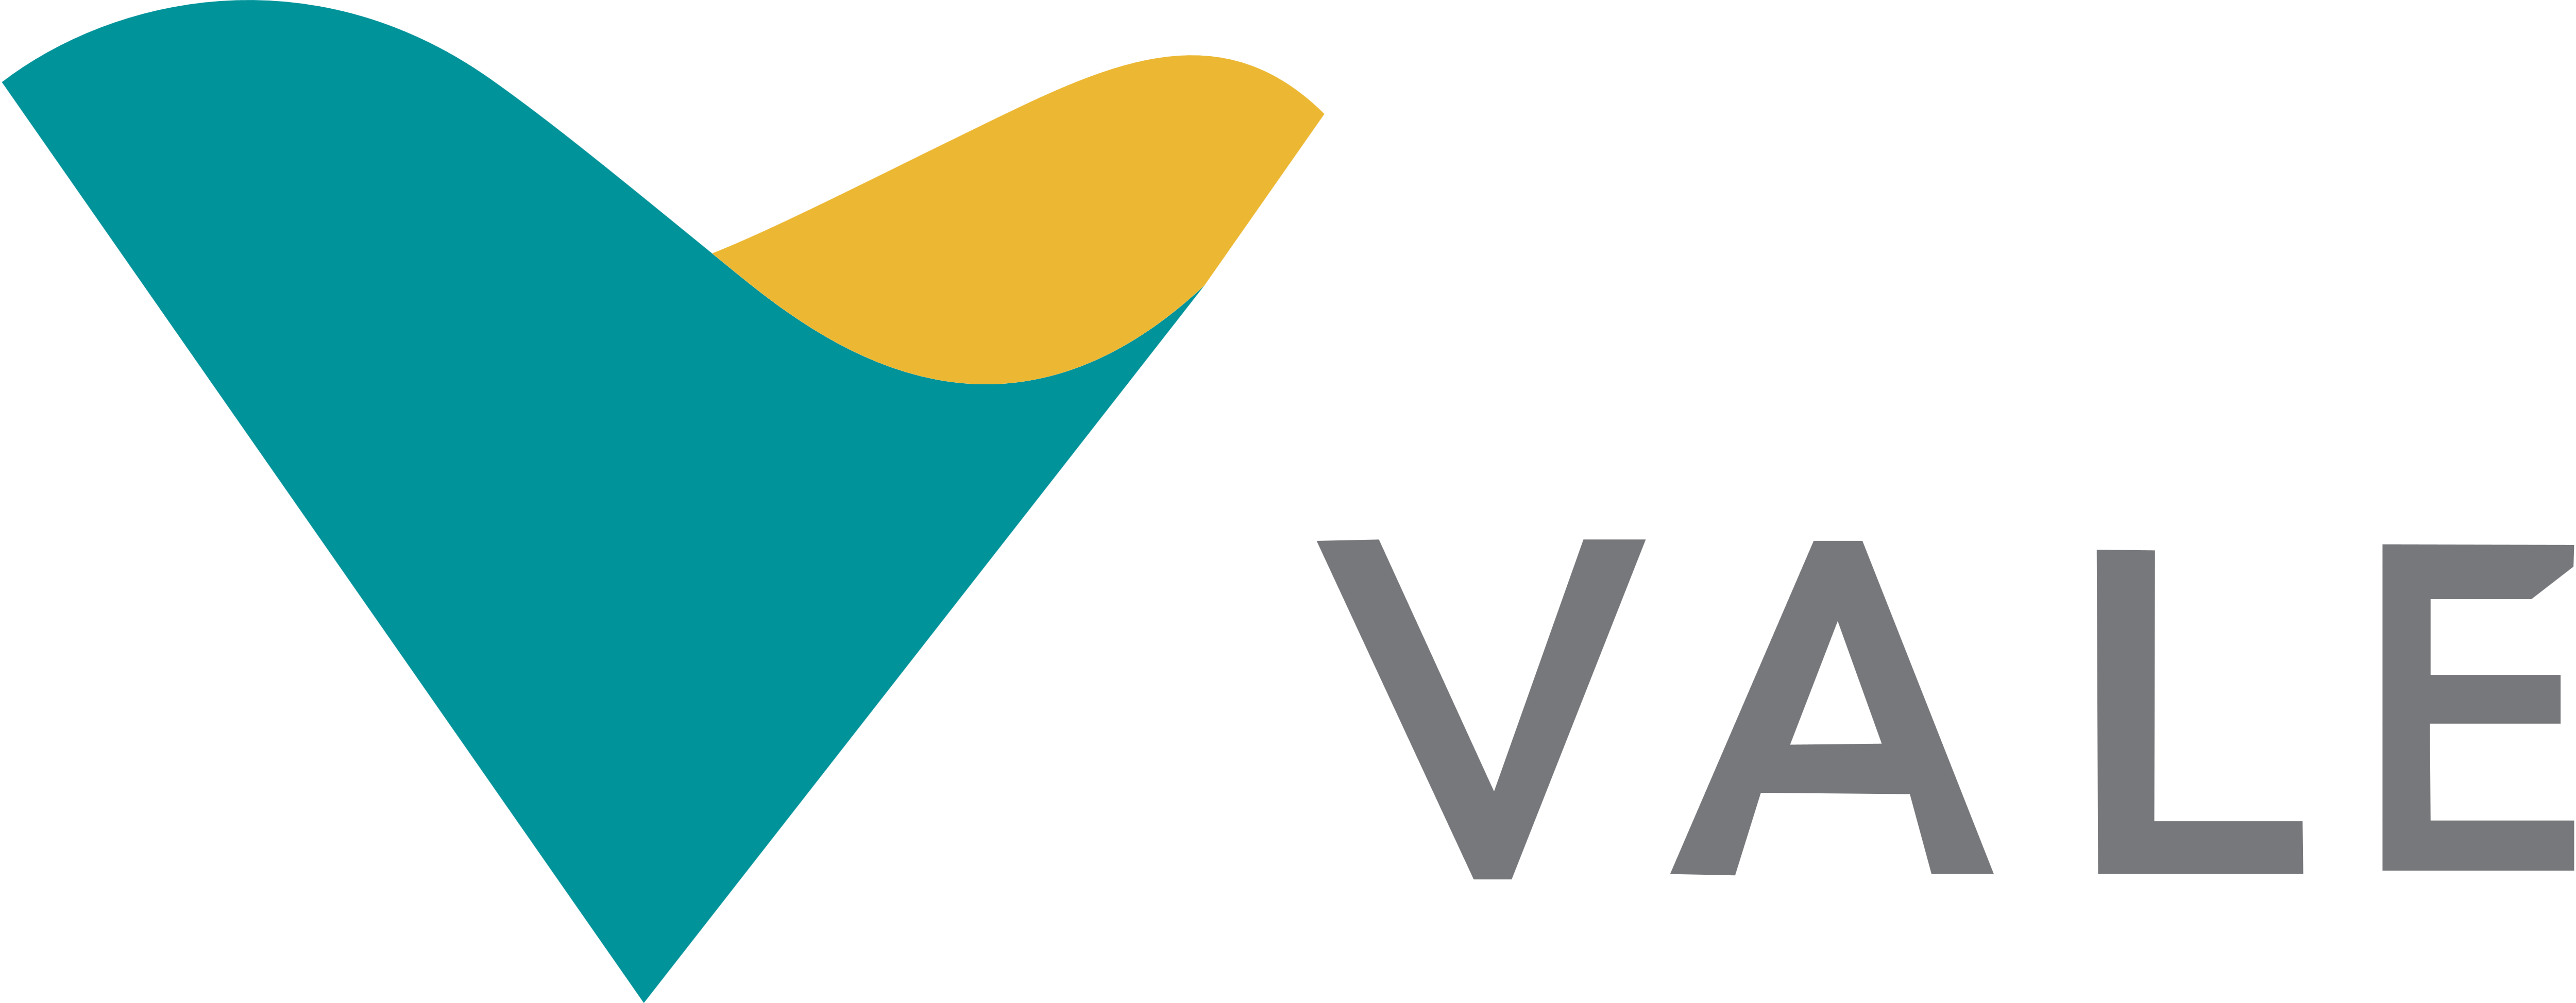 Vale Logo - Vale Logo